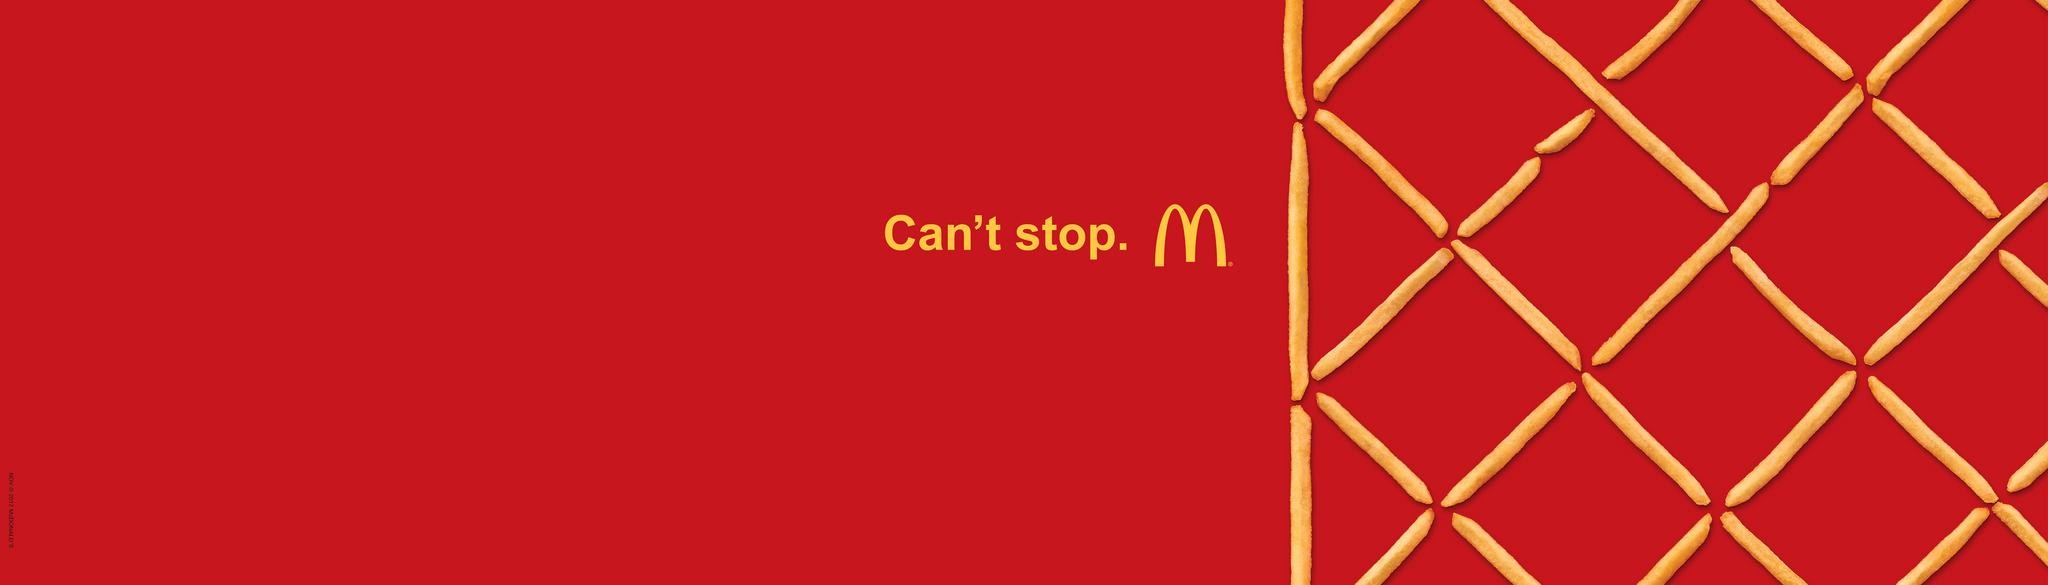 McDonald's "Can't Stop" Billboard